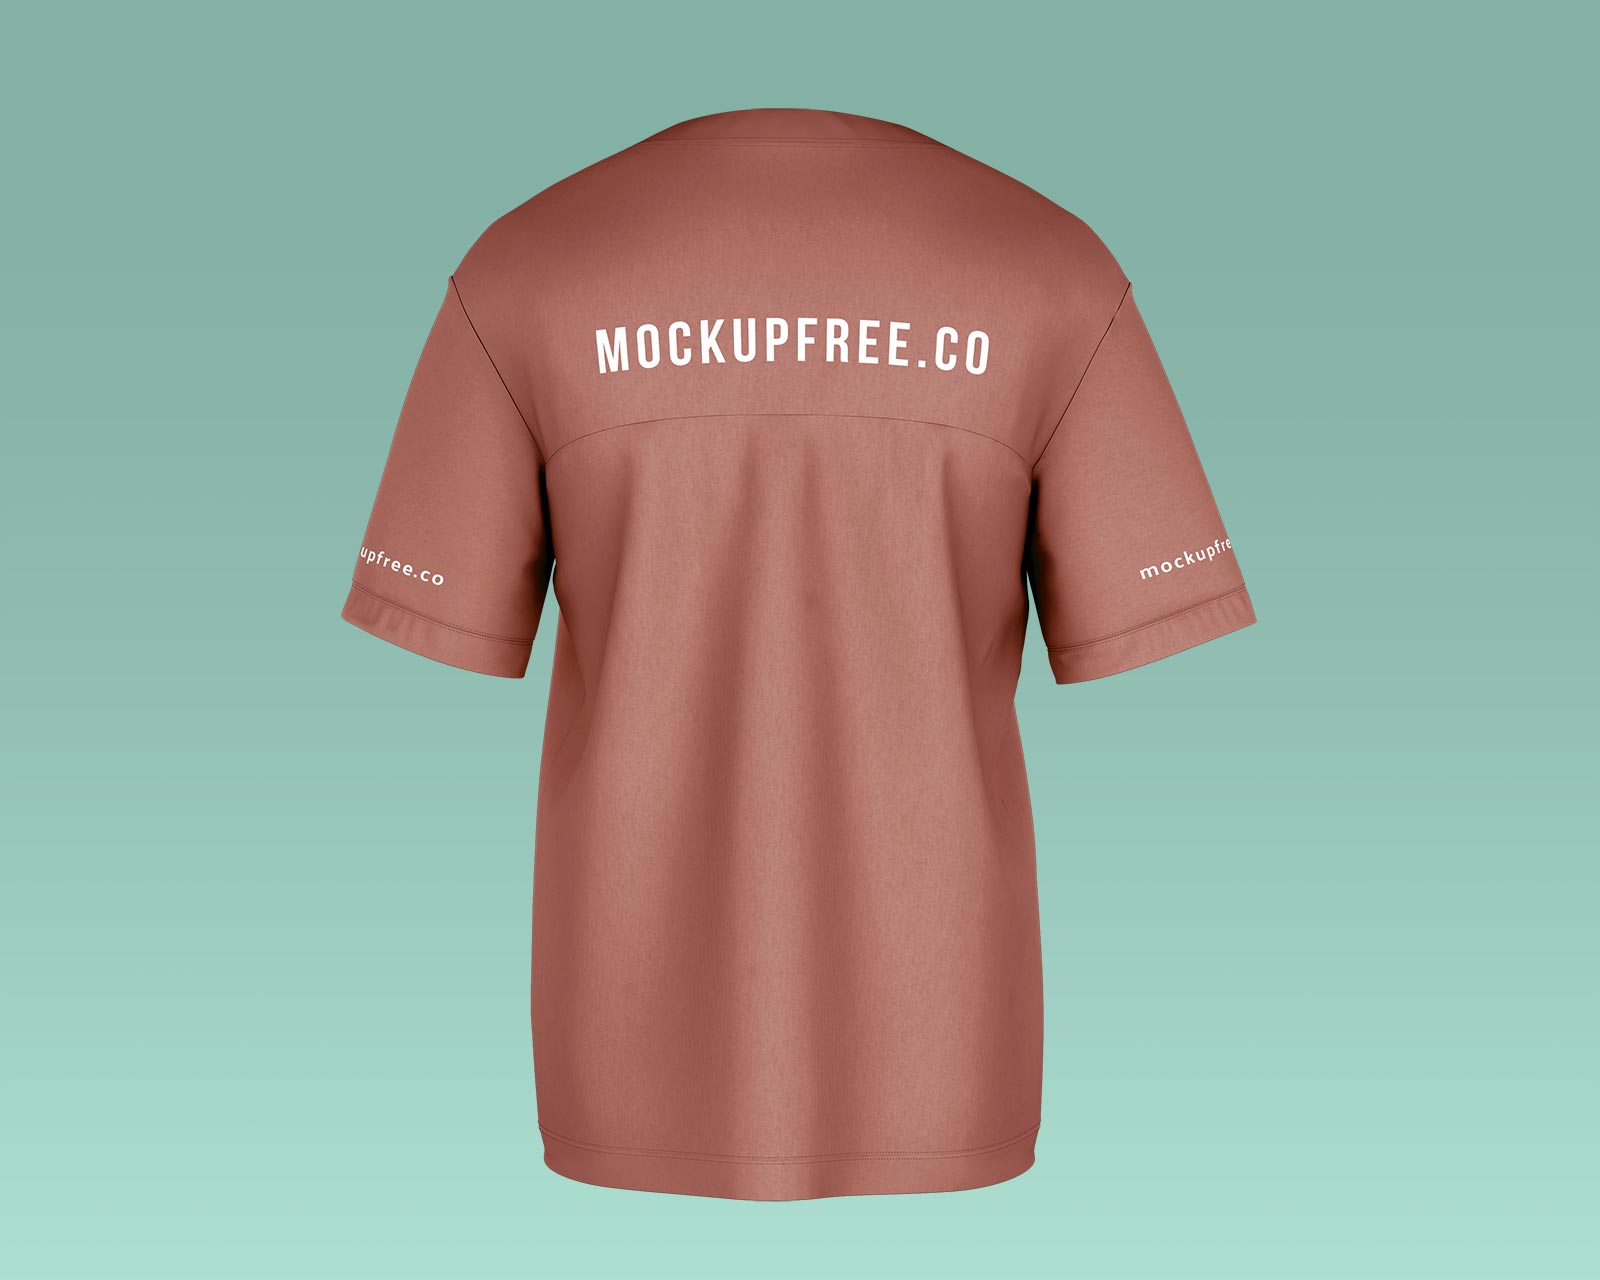 Free Oversized Half Sleeves T-Shirt Mockup PSD Set